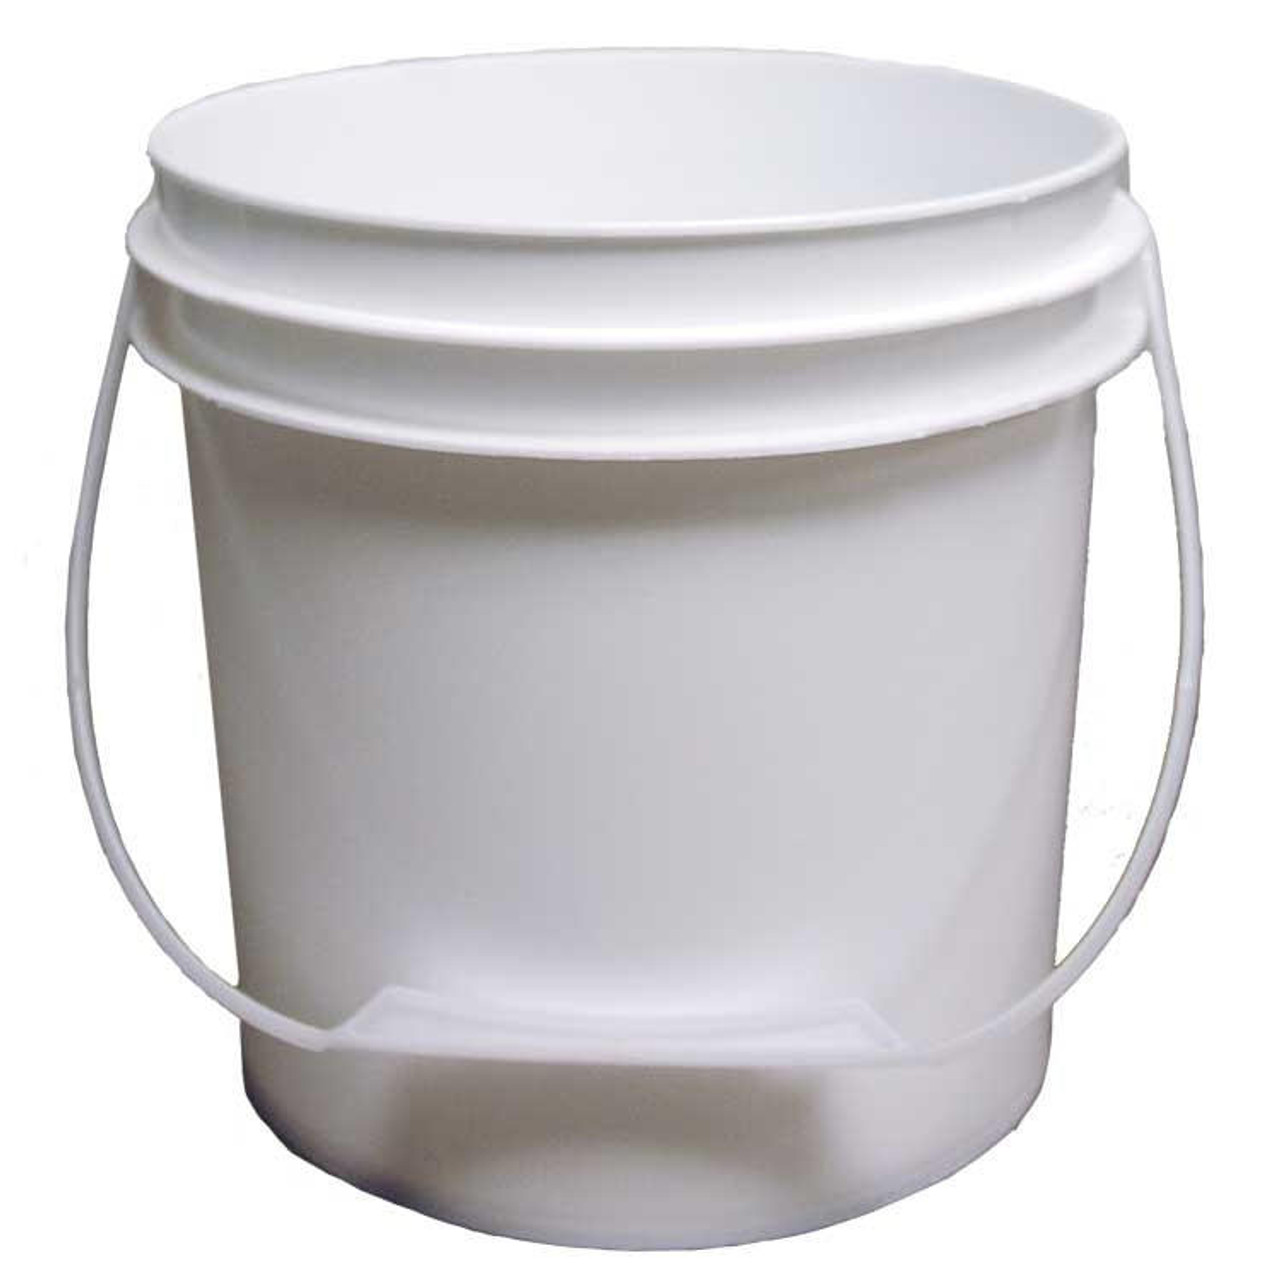 5 Gallon Buckets - White Plastic Pails